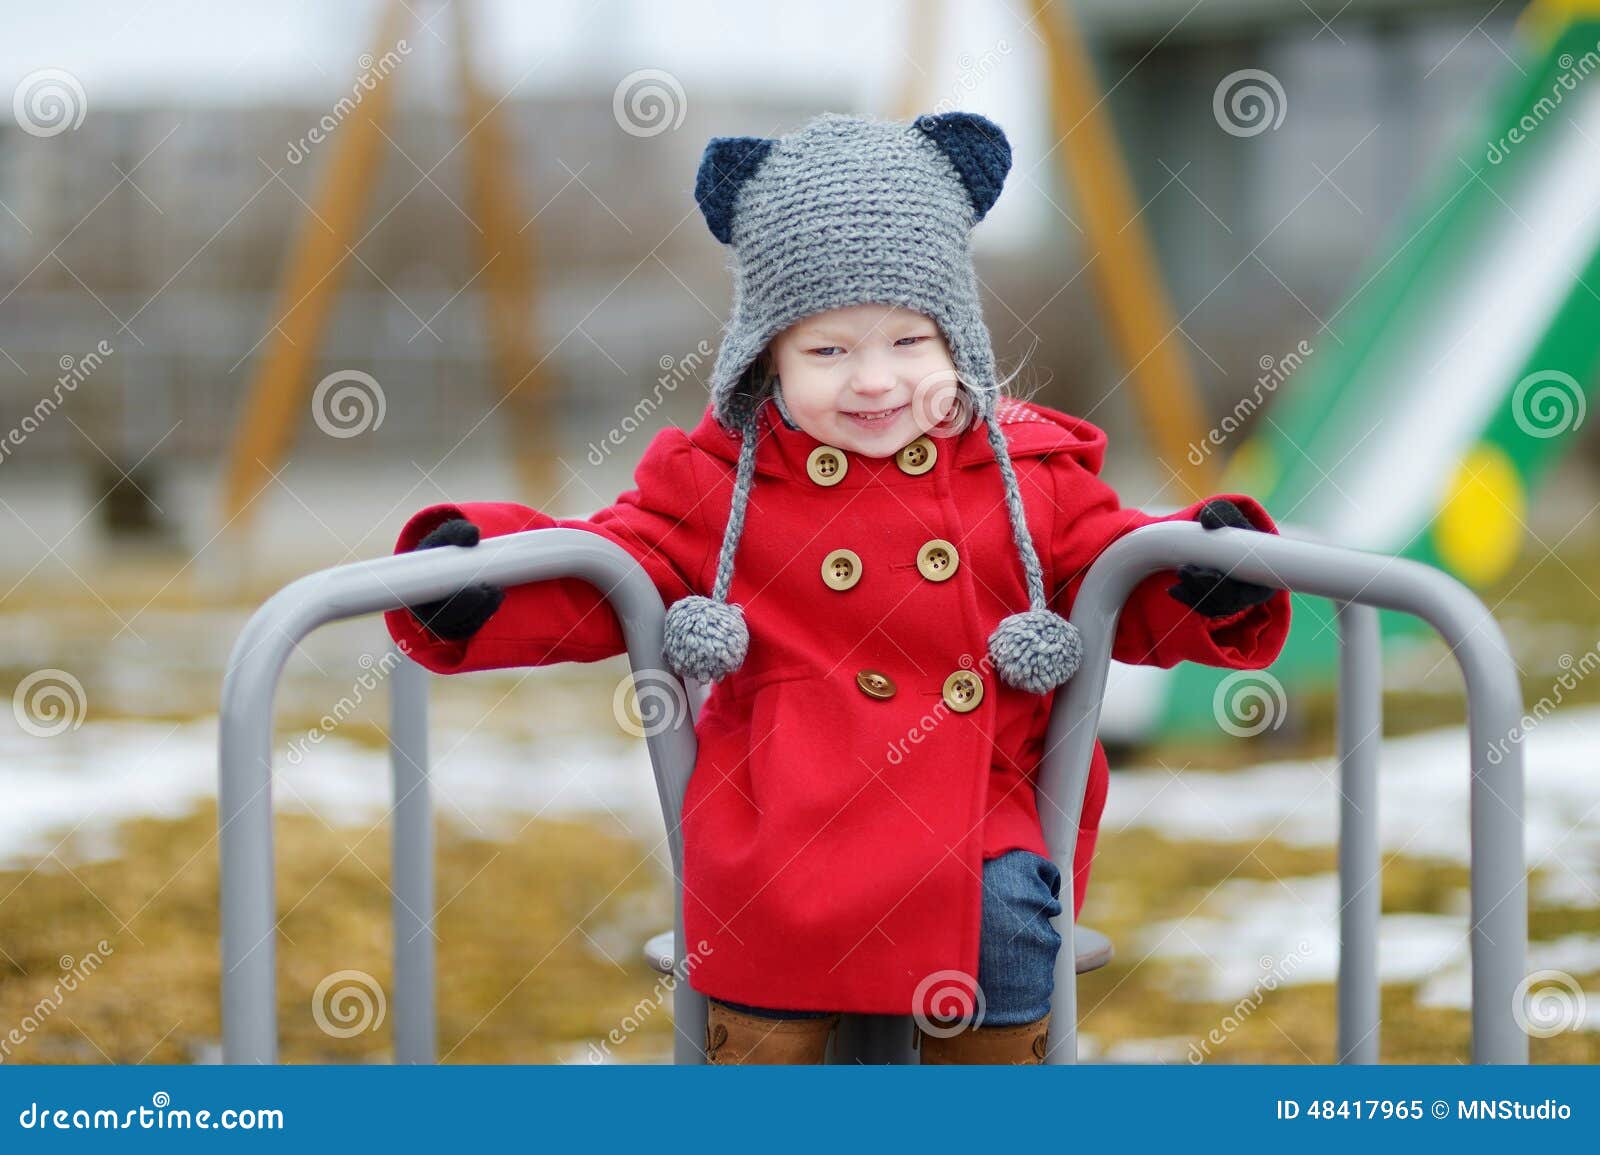 adorable girl having fun on a playgroud on spring